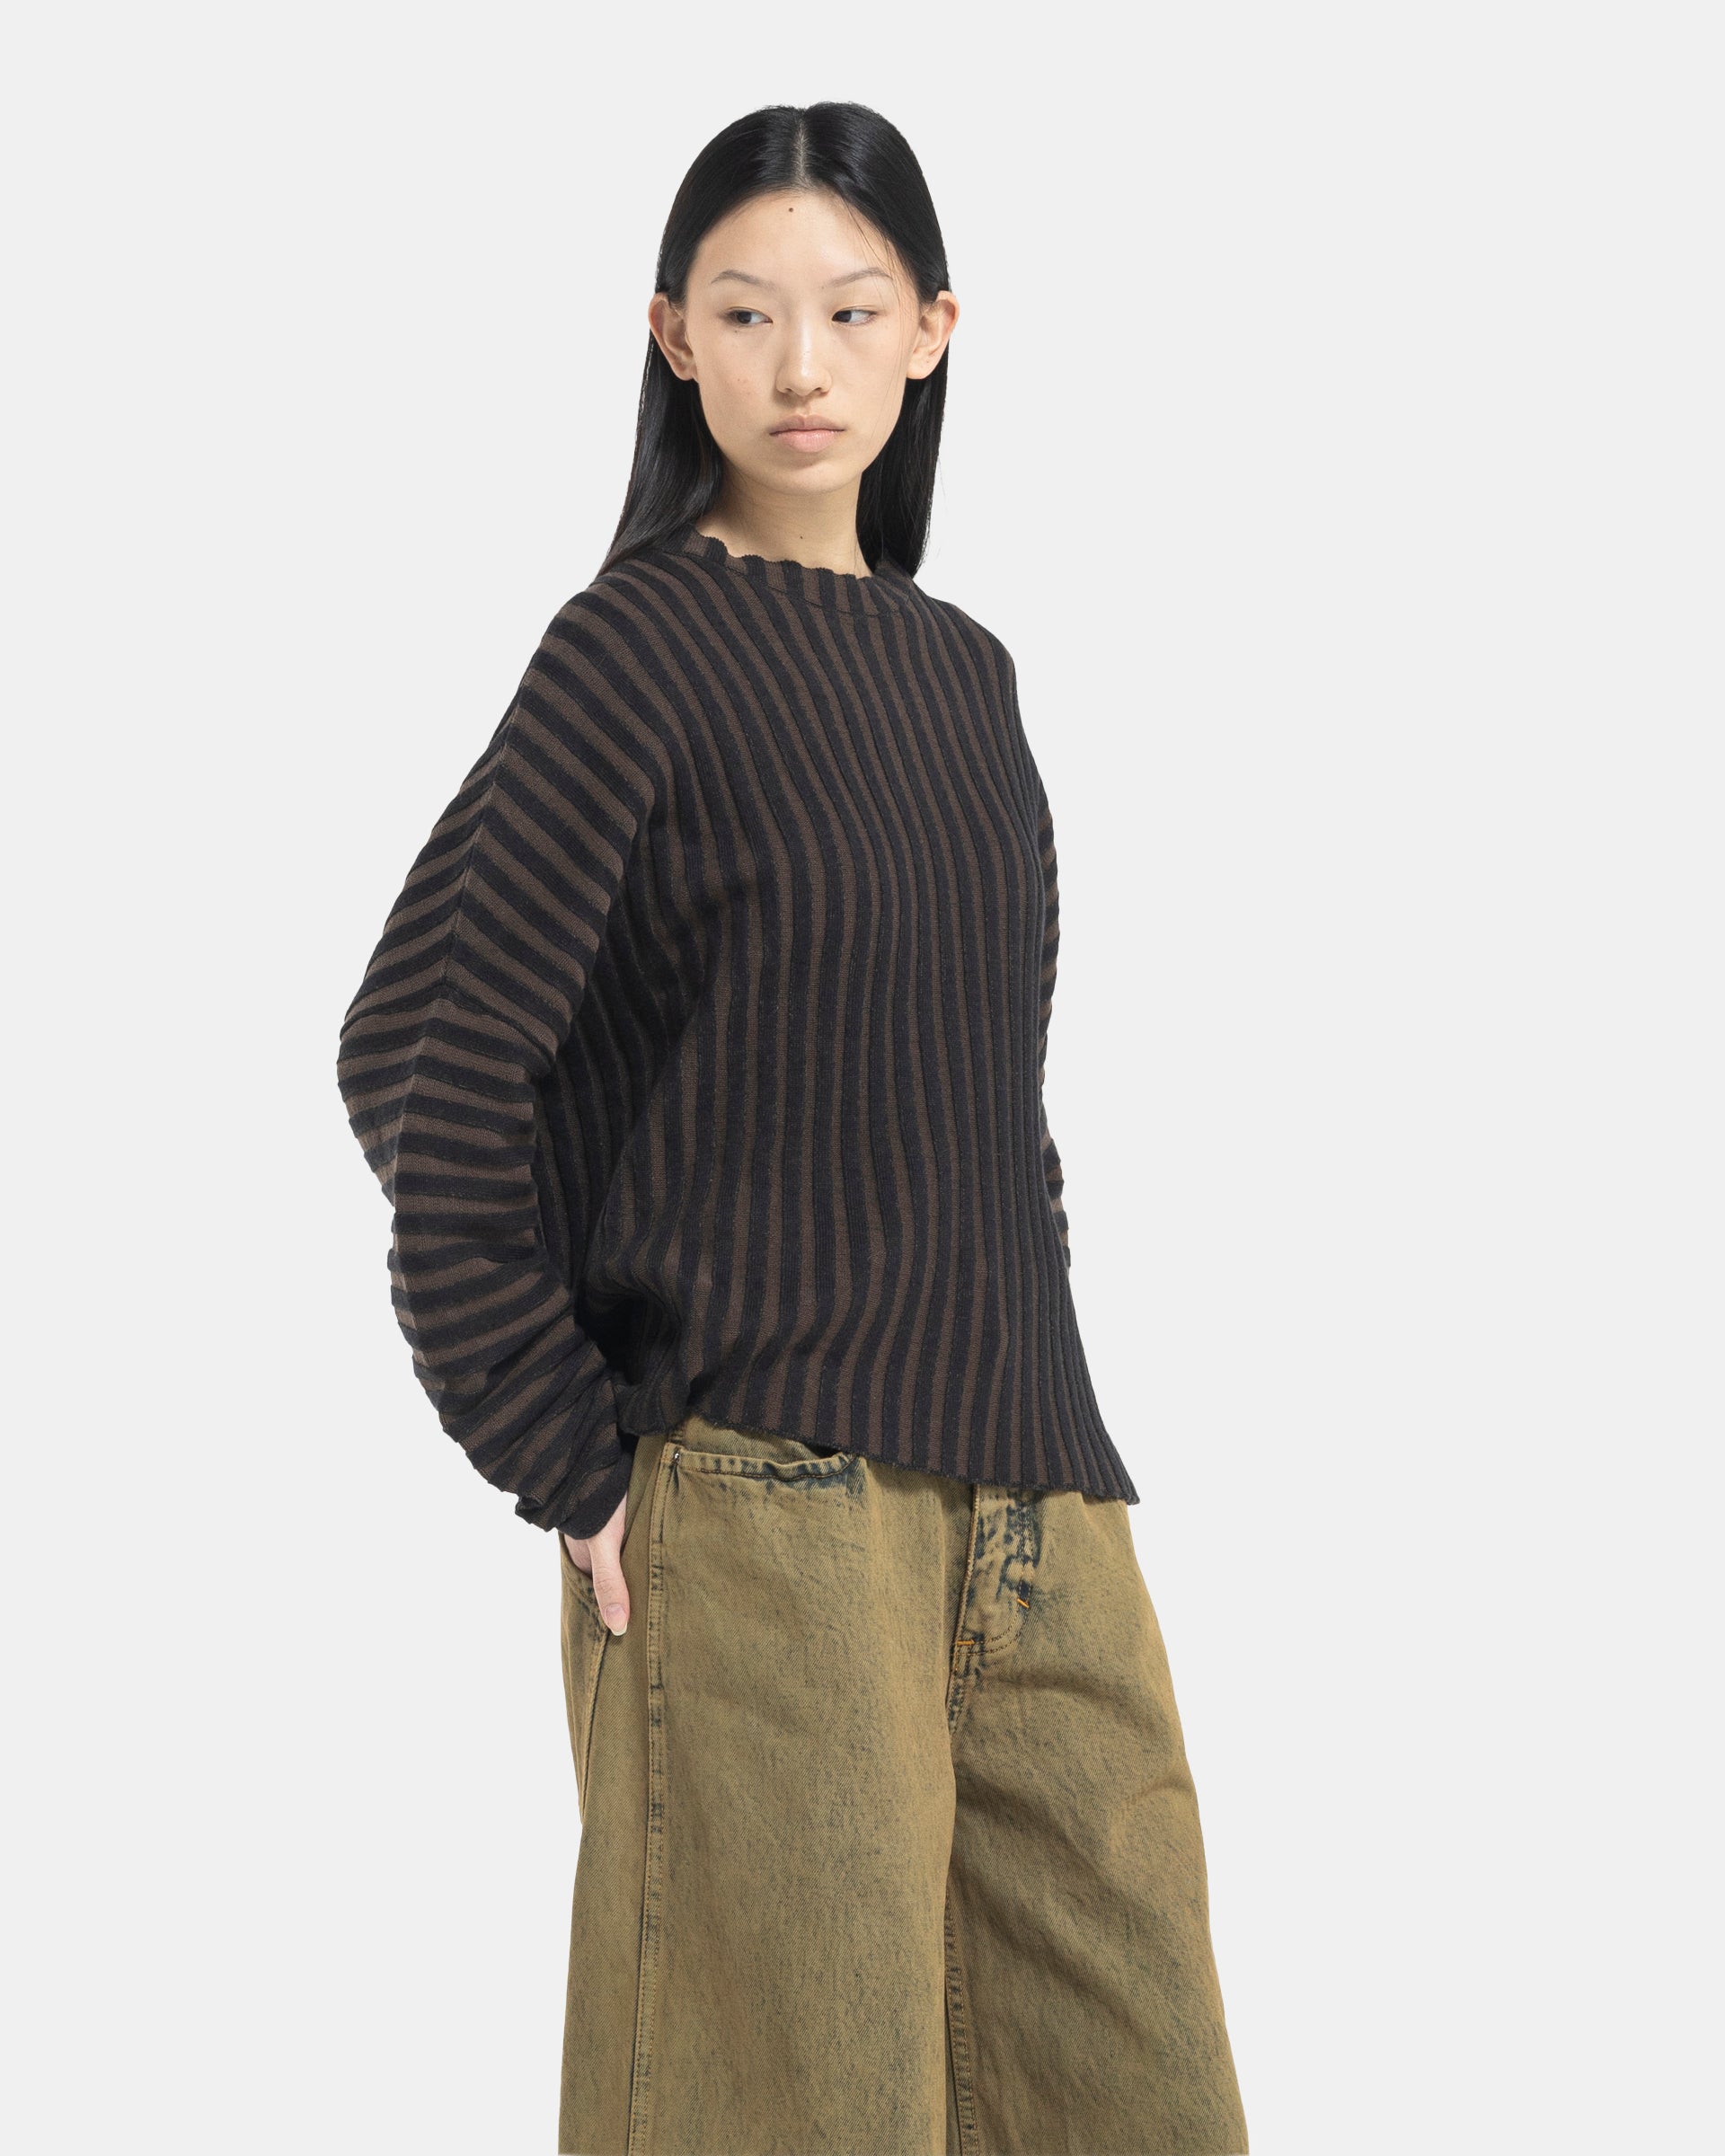 Female model wearing Eckhaus Latta Designer Wool Brown Sweater with knit stripes